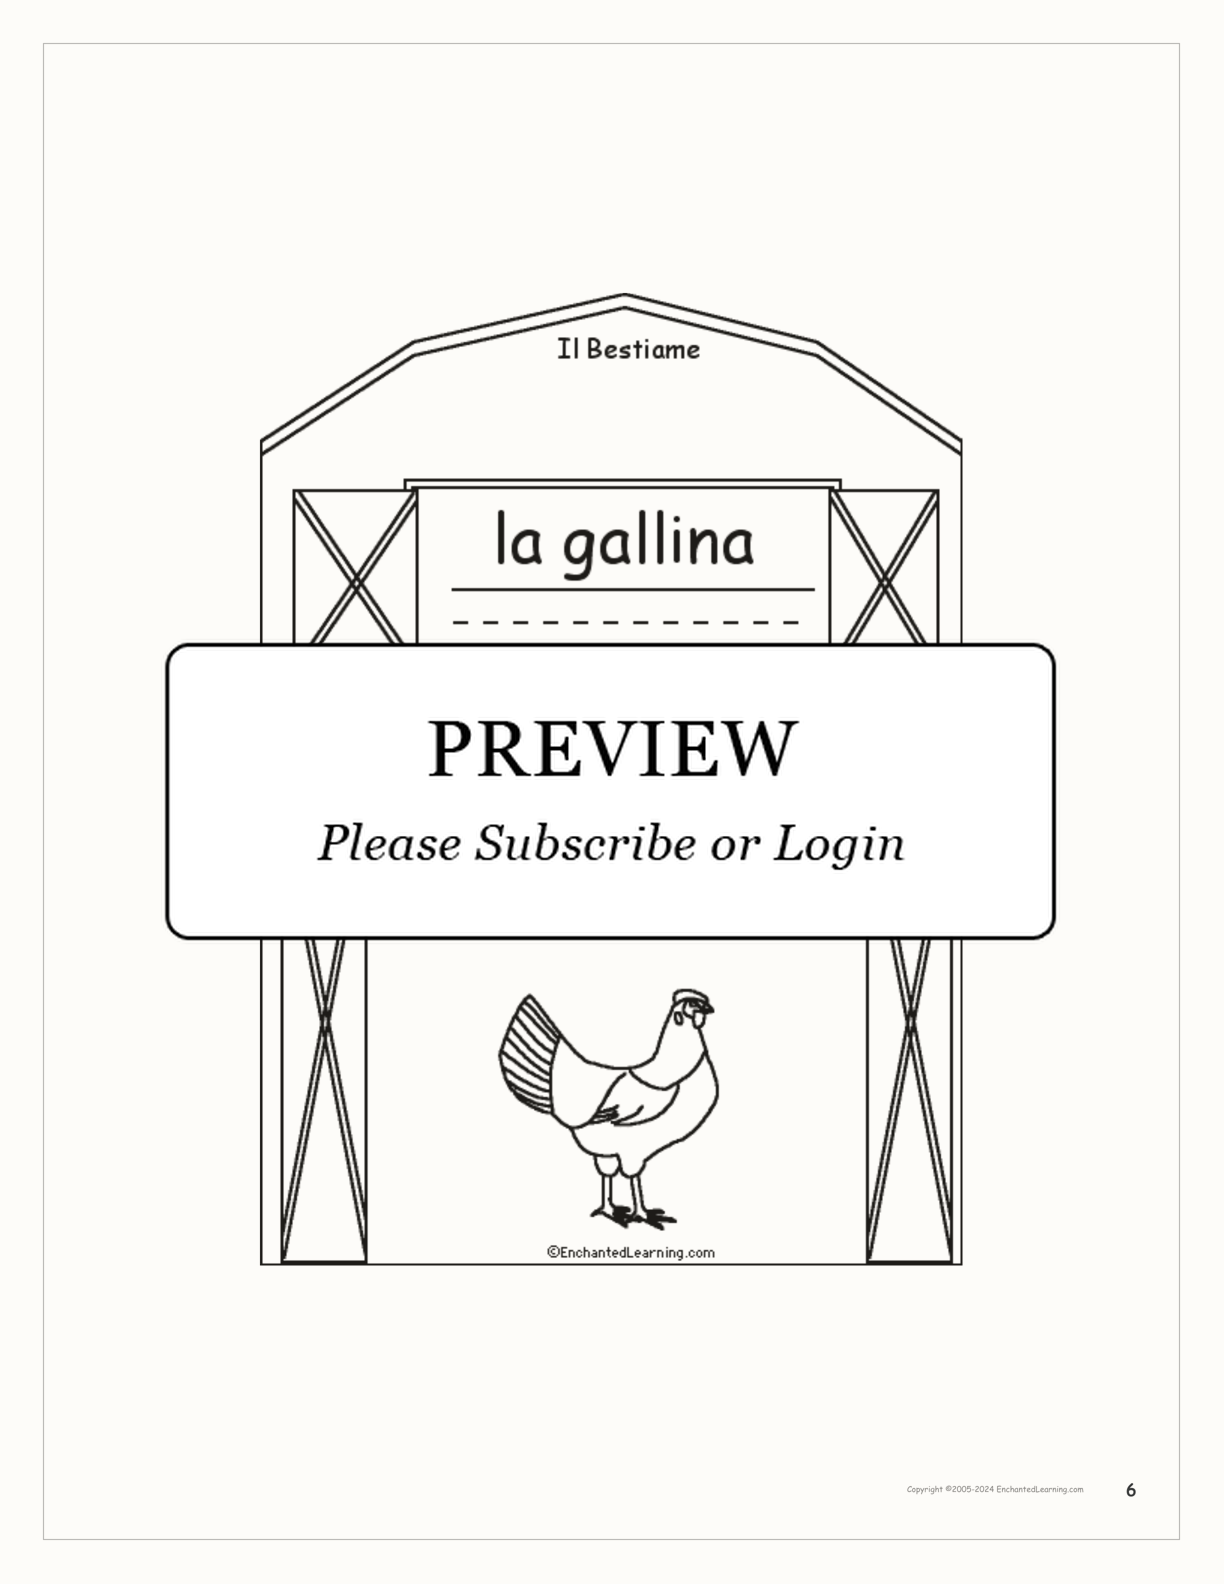 Bestiame/Livestock Italian Book interactive printout page 6